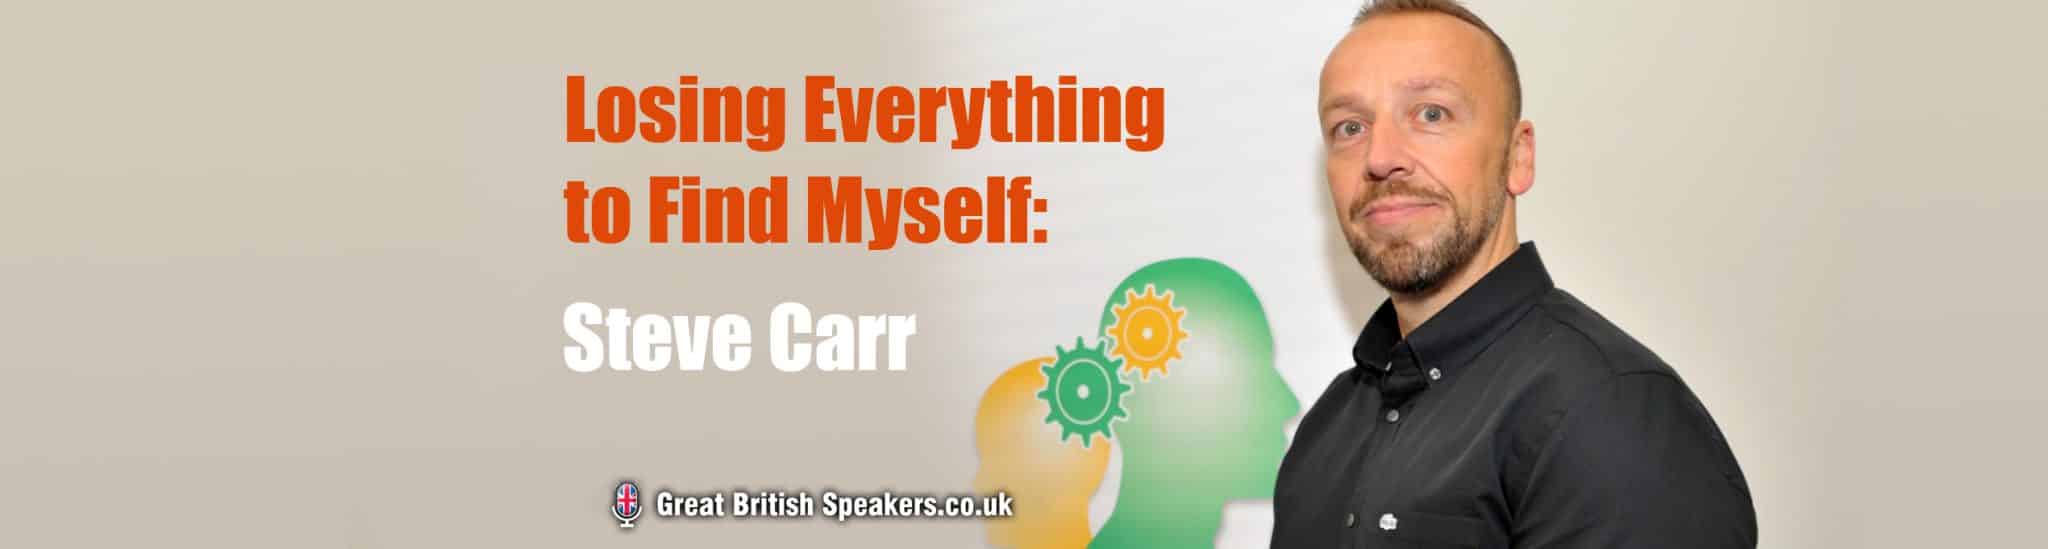 Steve Carr suicide homelessness mental health speaker at Great British Speakers